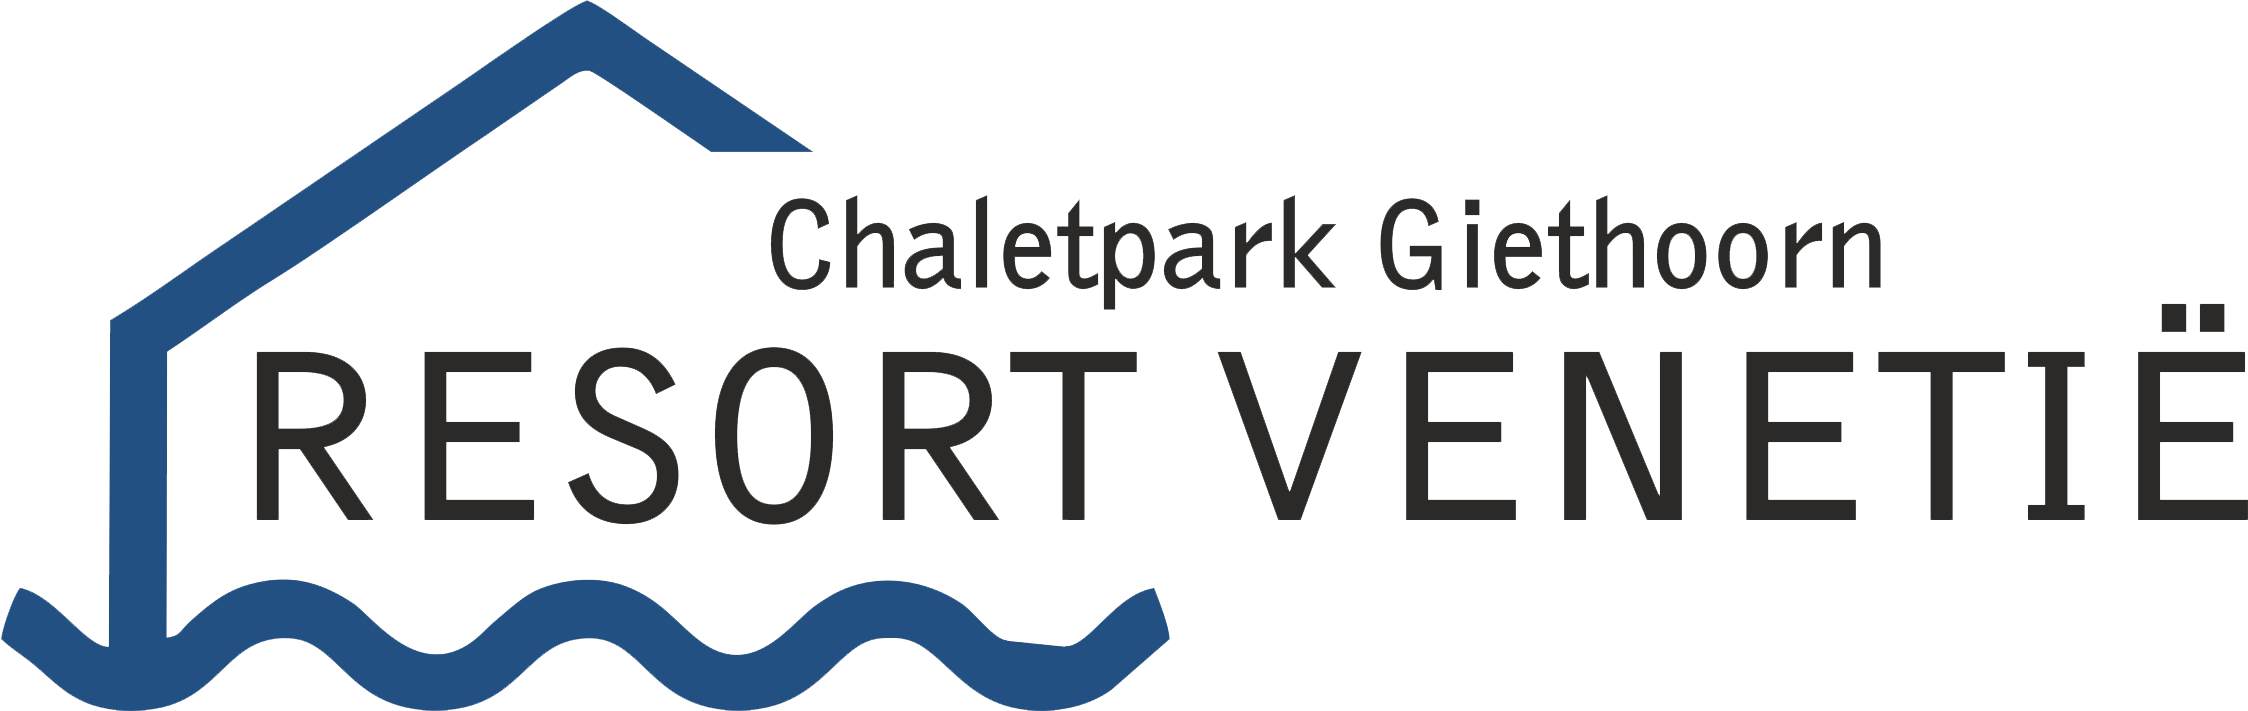 Chaletpark Resort Venetië Giethoorn